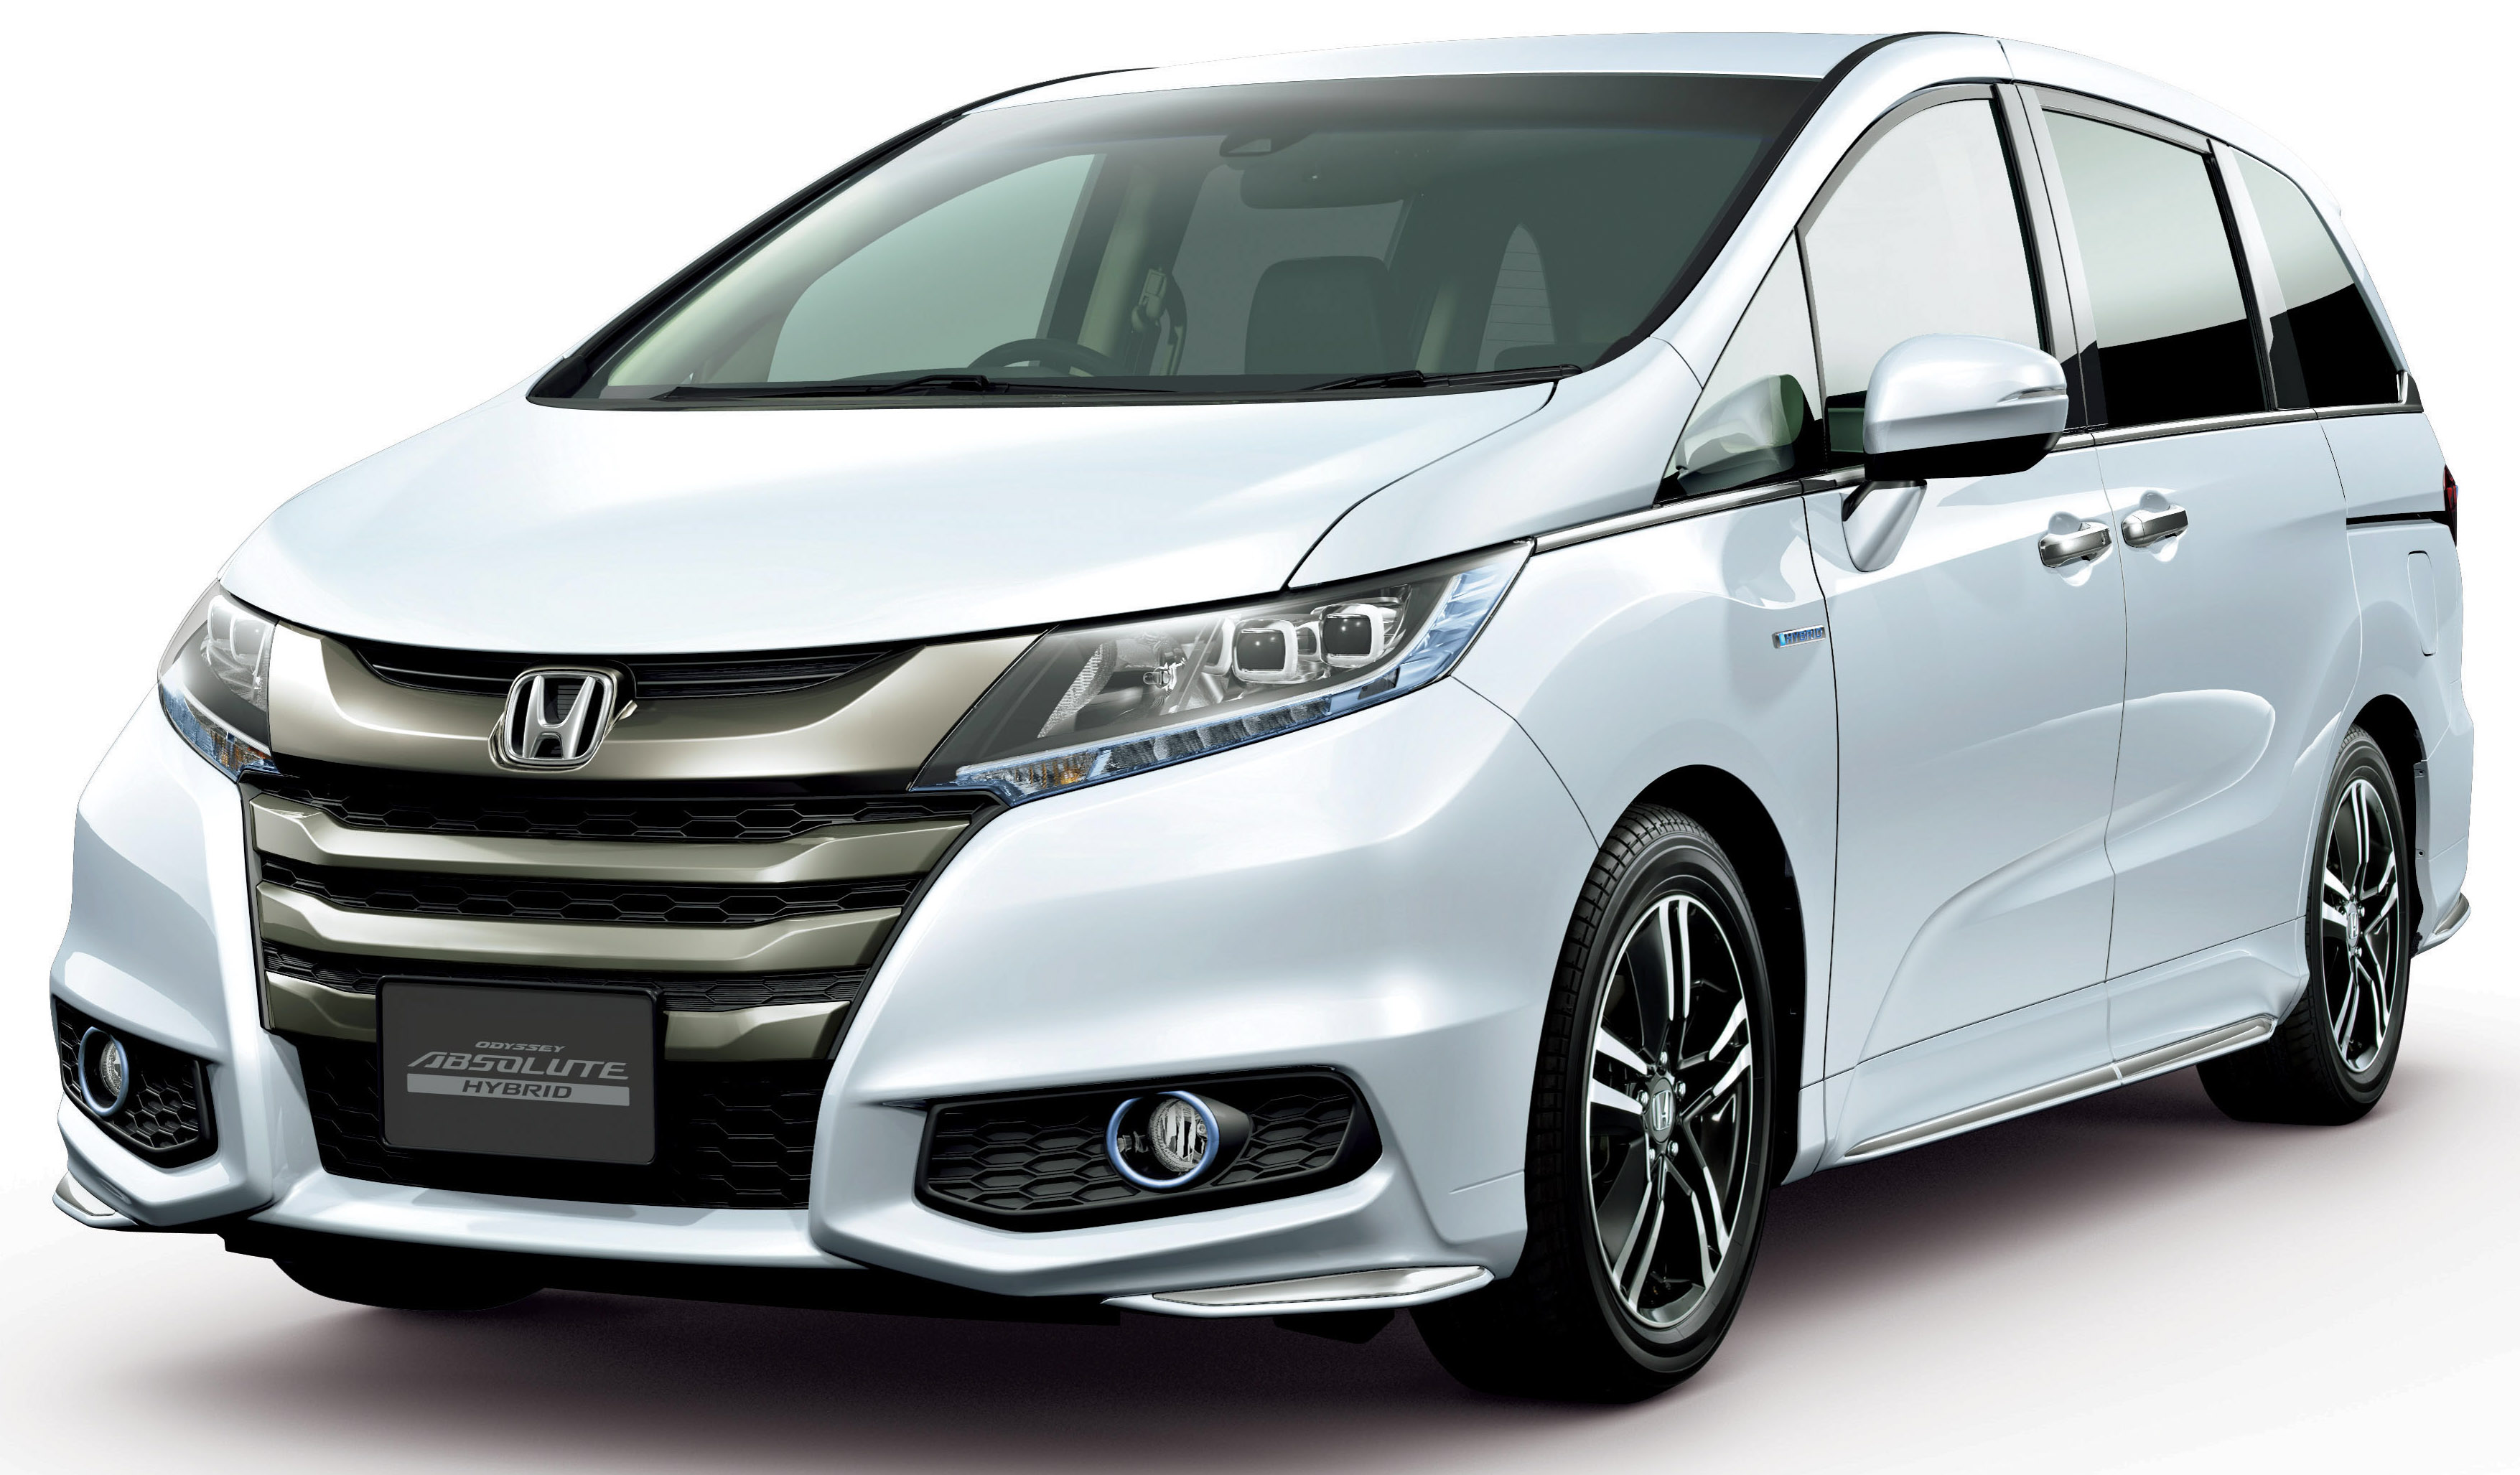 Honda Odyssey Hybrid/refresh goes on sale in Japan Image 438320